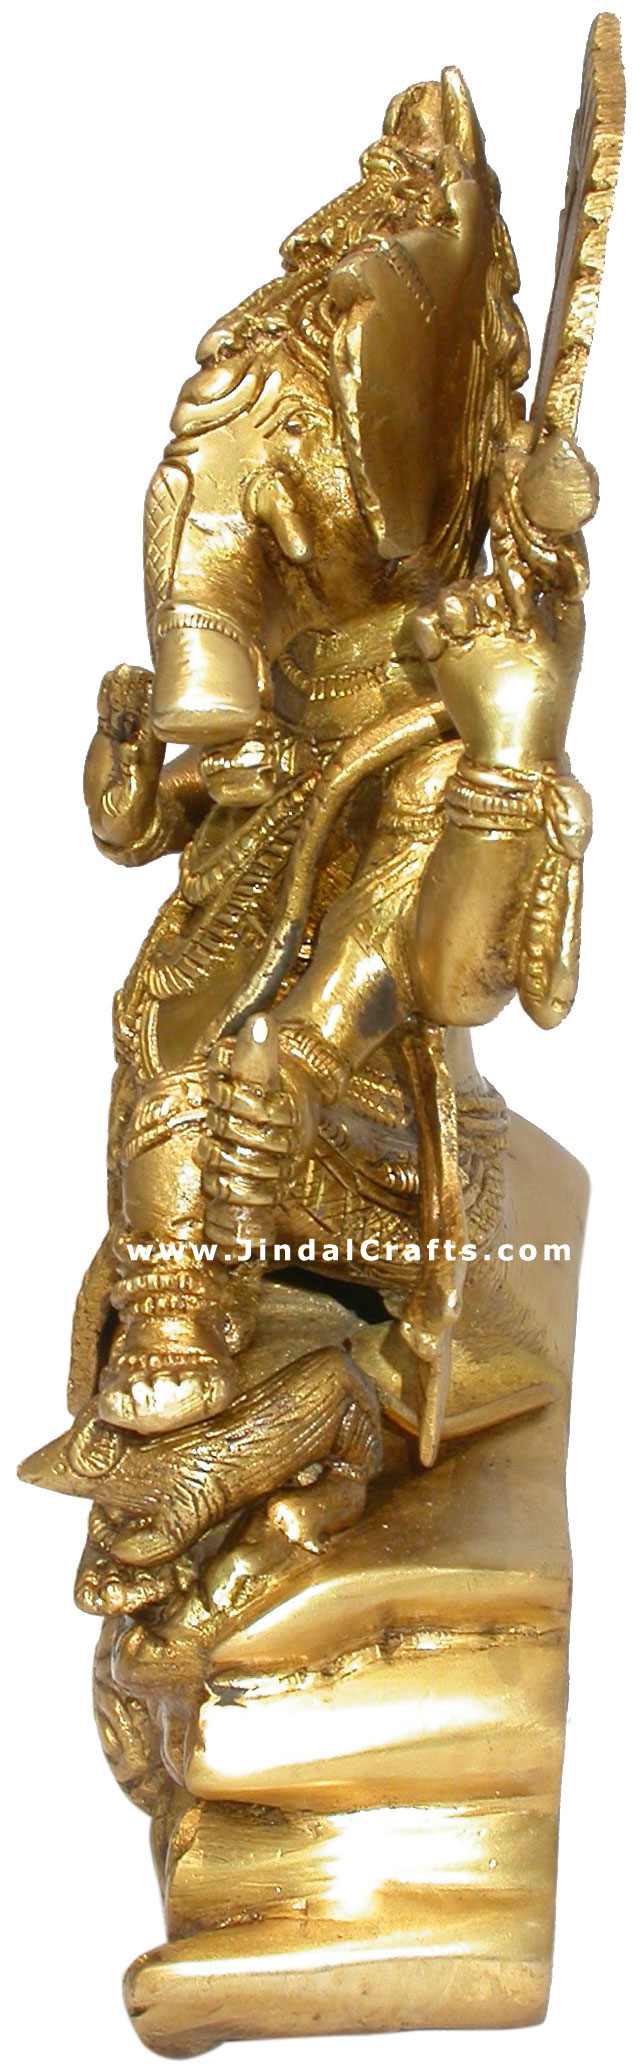 Lord Ganesh - Indian God Statue Hindu Handmade Artifact